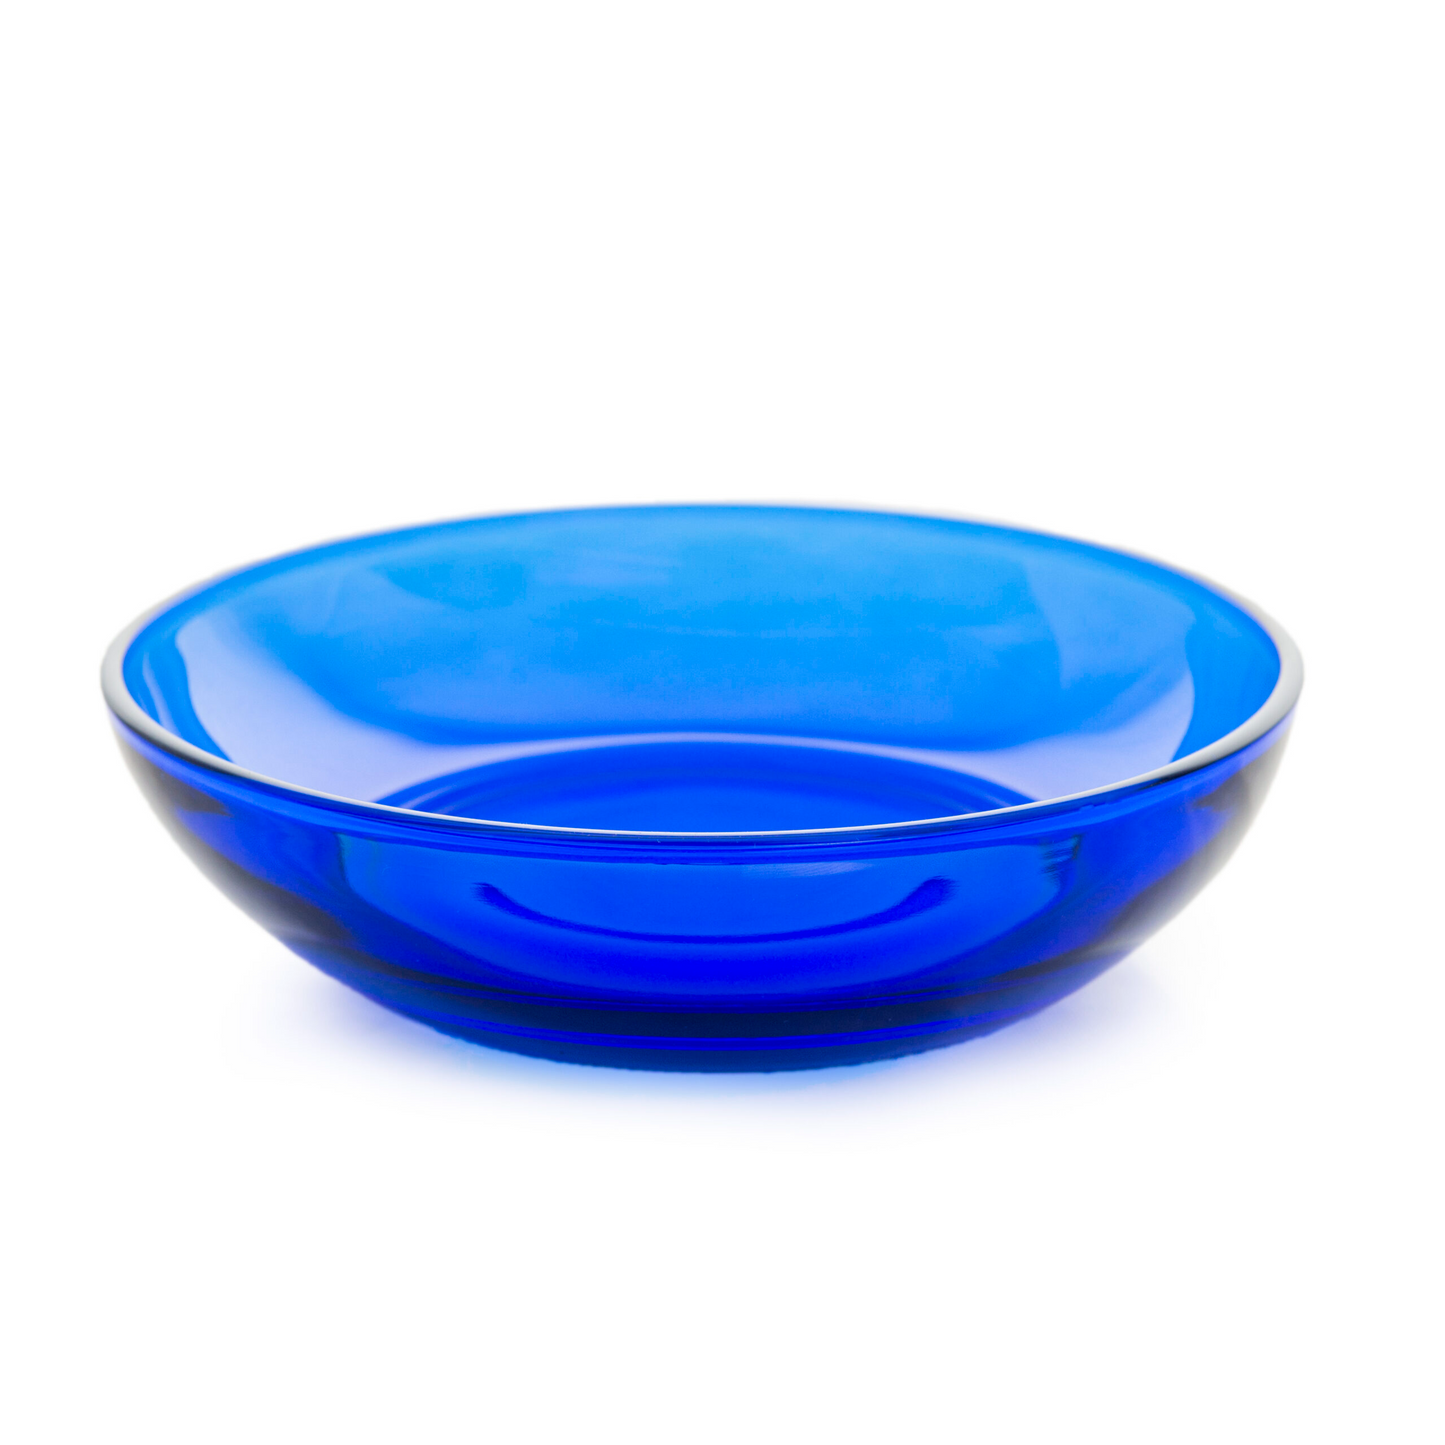 Bowls - Pressed Glass